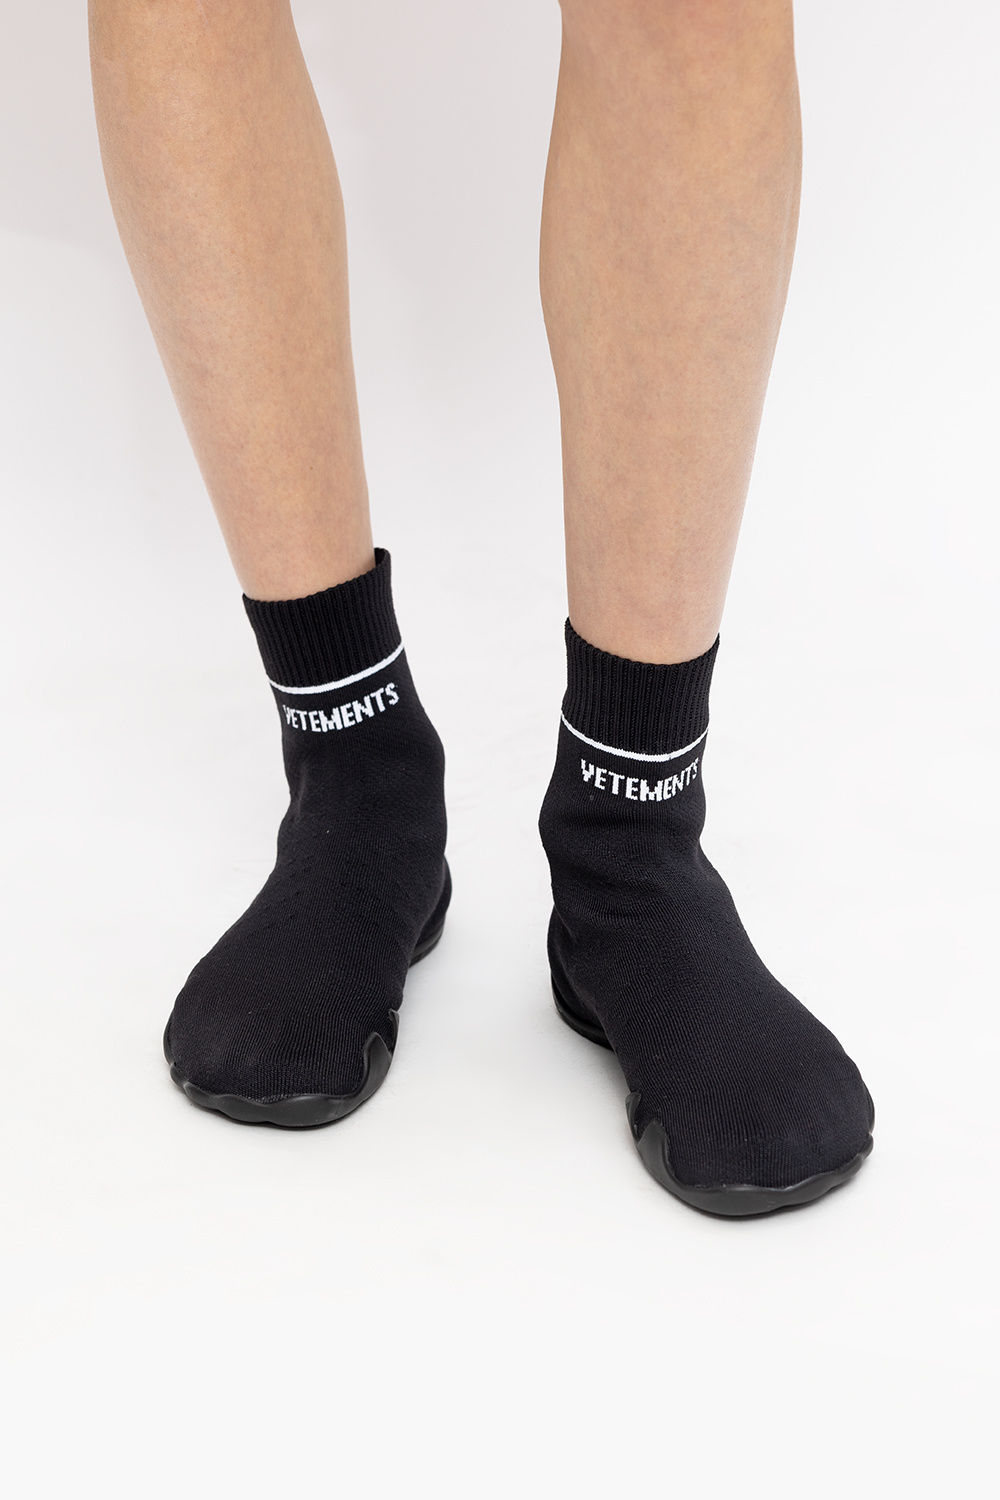 Black Sock sneakers VETEMENTS - SALVATORE FERRAGAMO SKYLAR SNEAKERS -  IetpShops Croatia